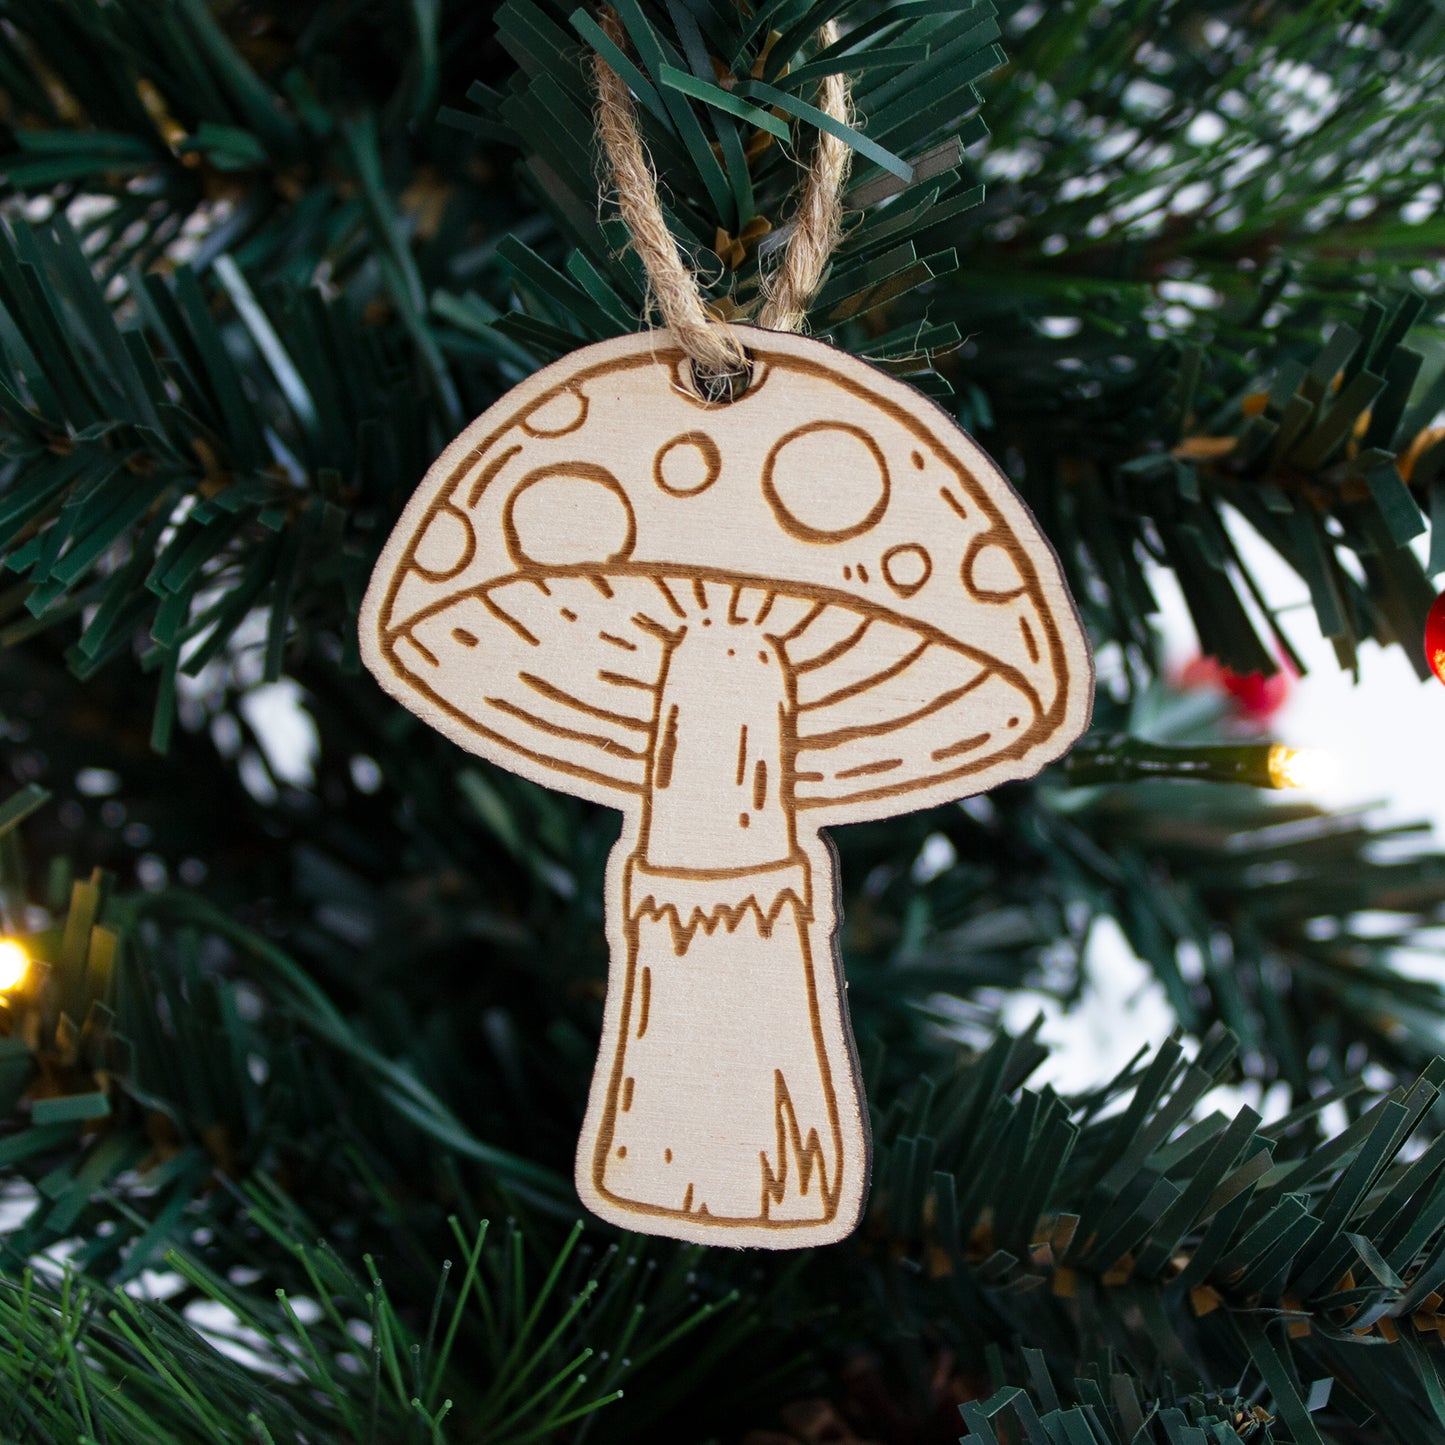 Wooden Mushroom Tree Decorations, Set of 4 Fungi Ornaments, Woodland